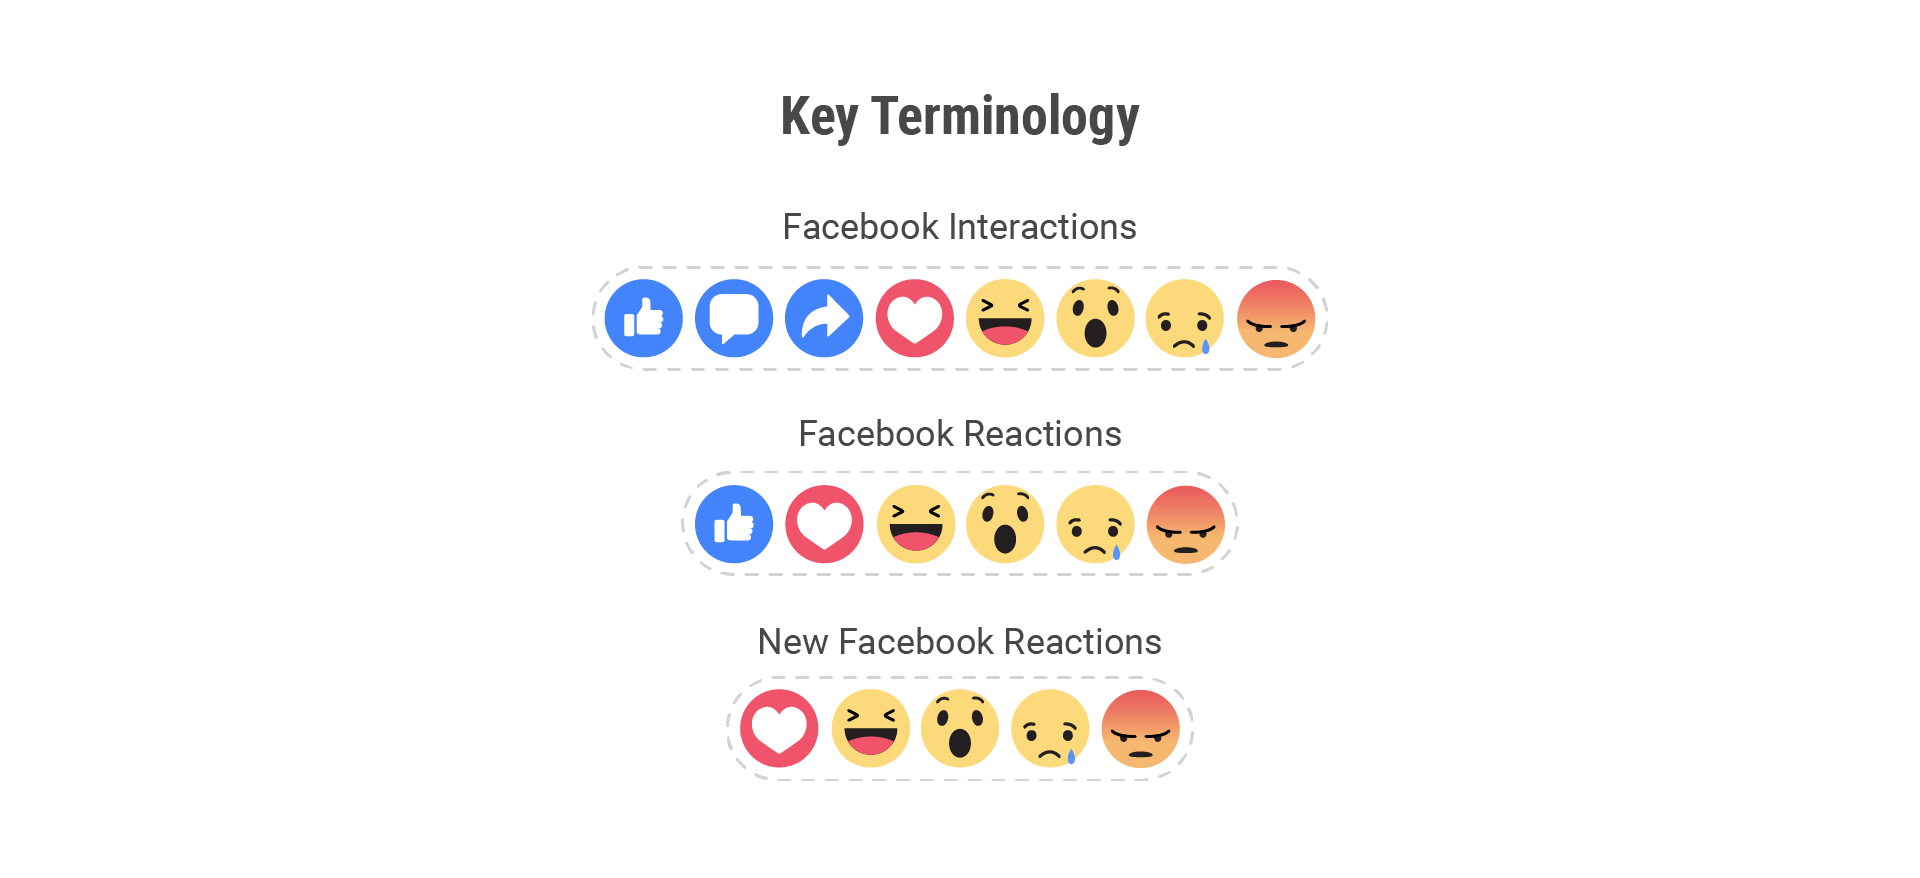 Facebook Interactions terminology 